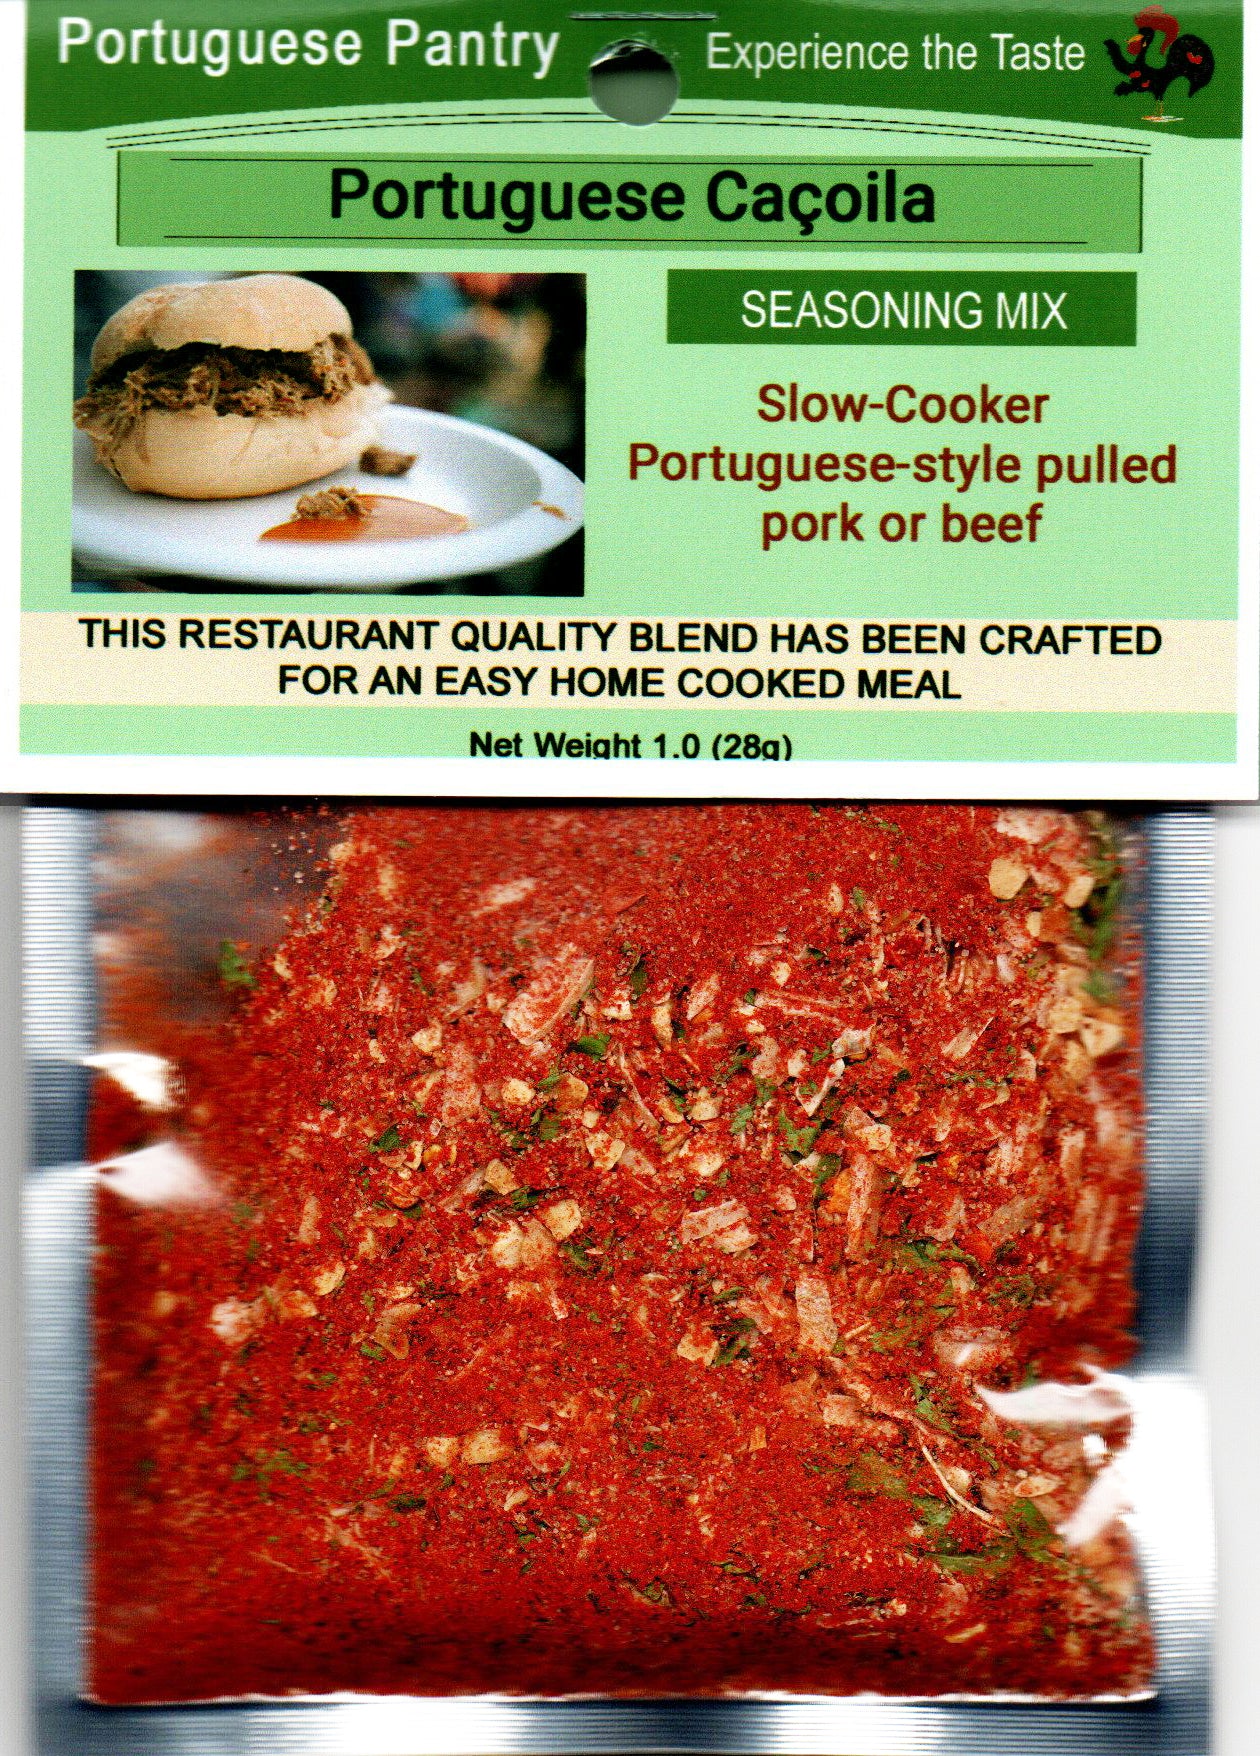 Portuguese Cacoila Seasoning